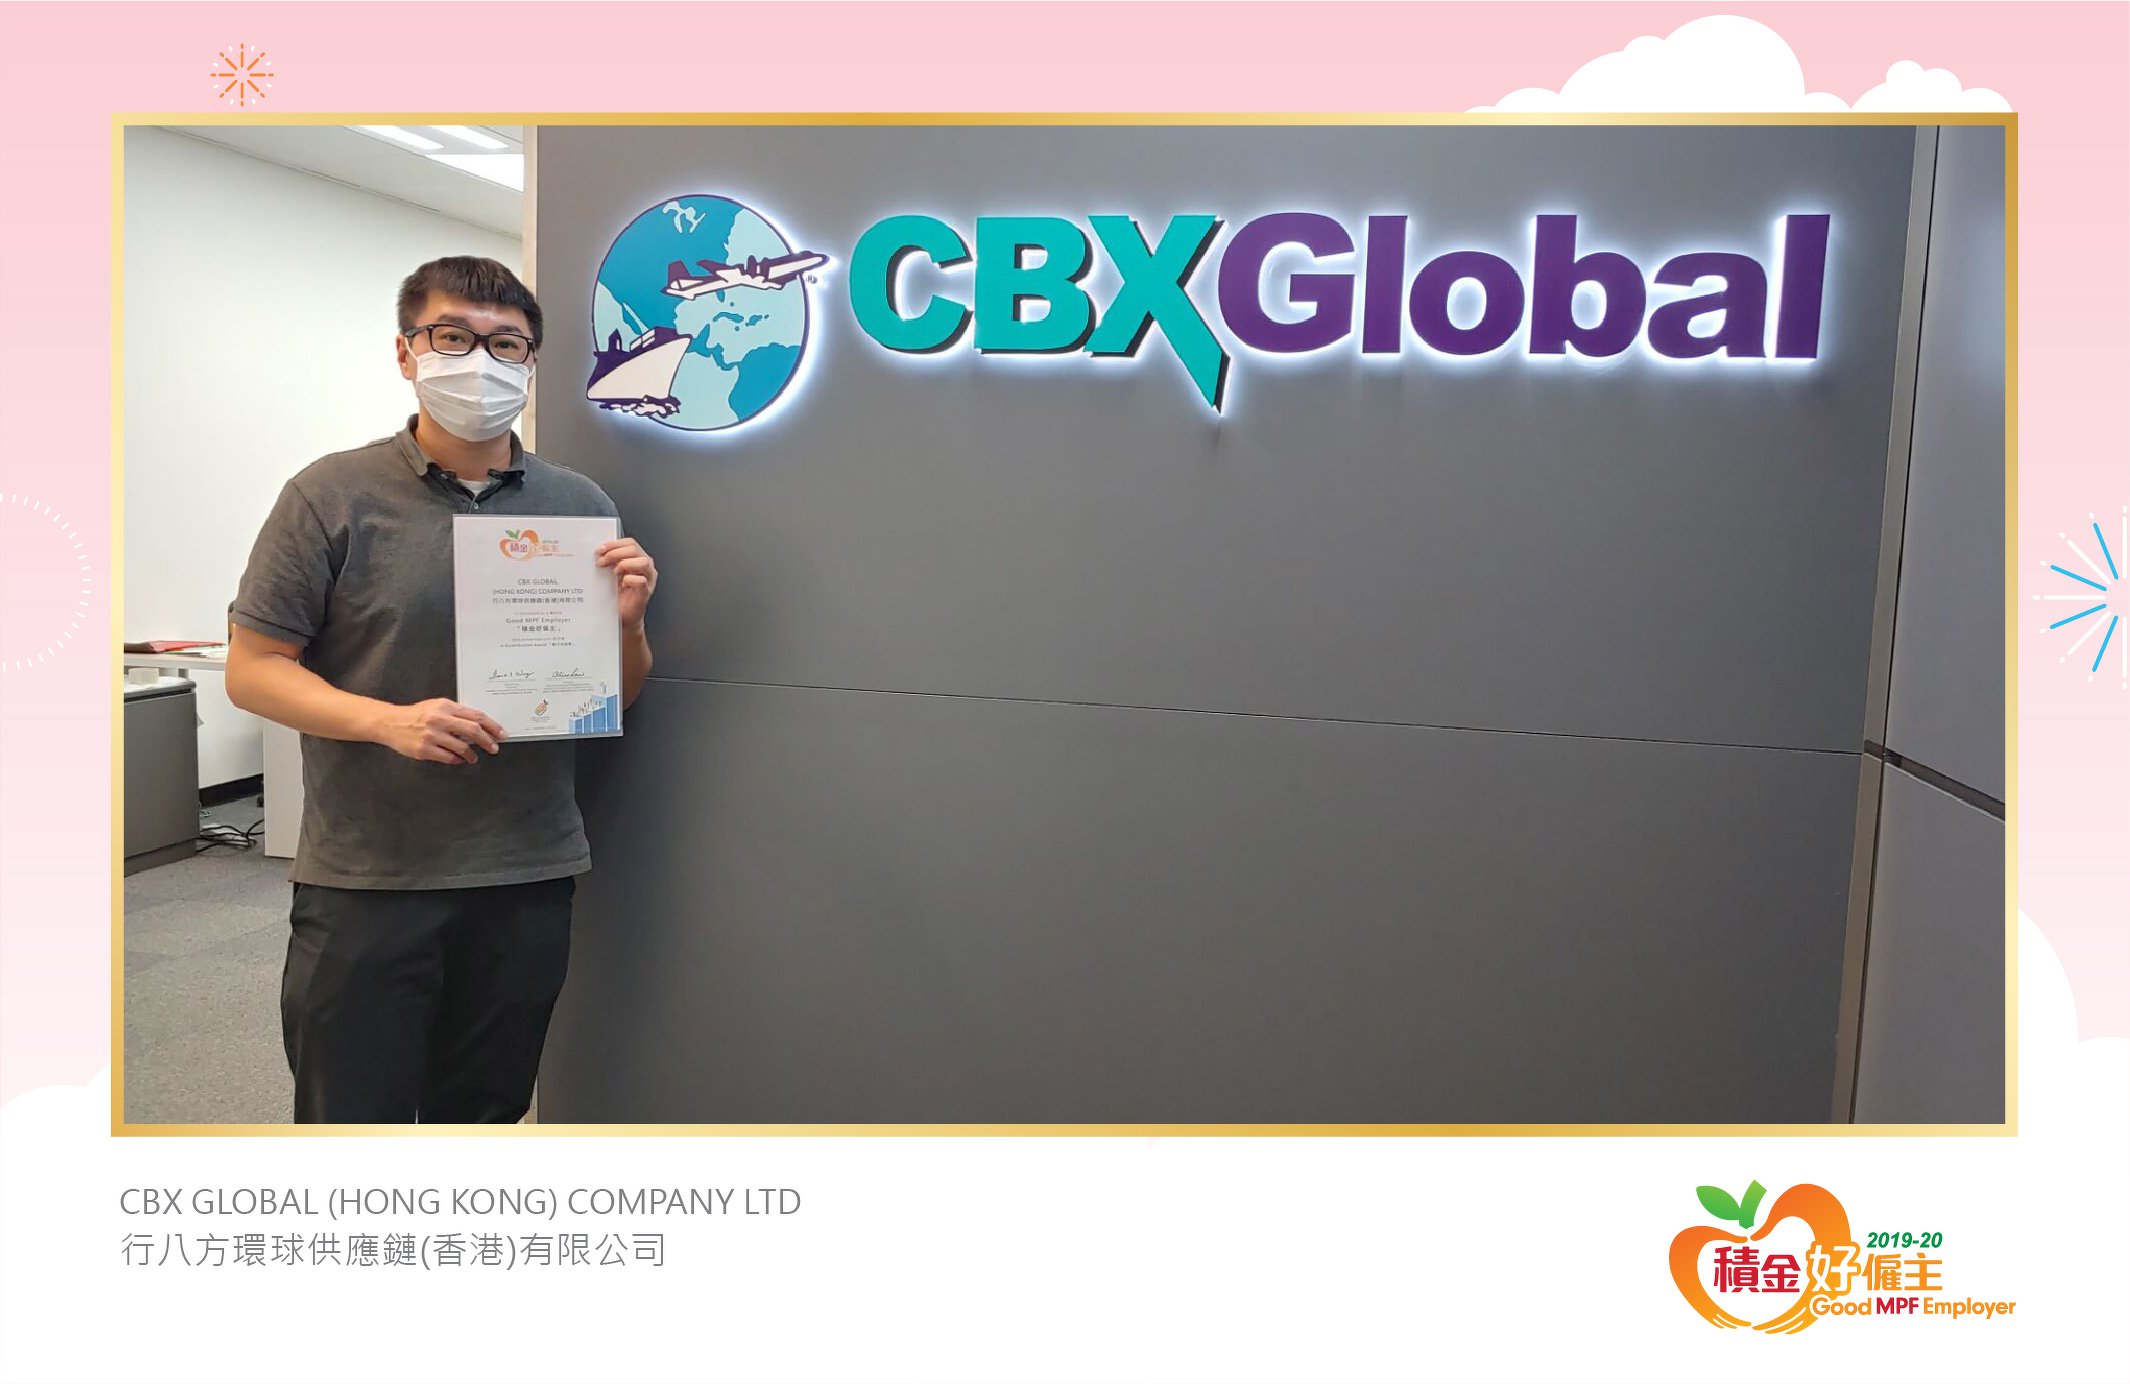 CBX GLOBAL (HONG KONG) COMPANY LTD 行八方環球供應鏈(香港)有限公司